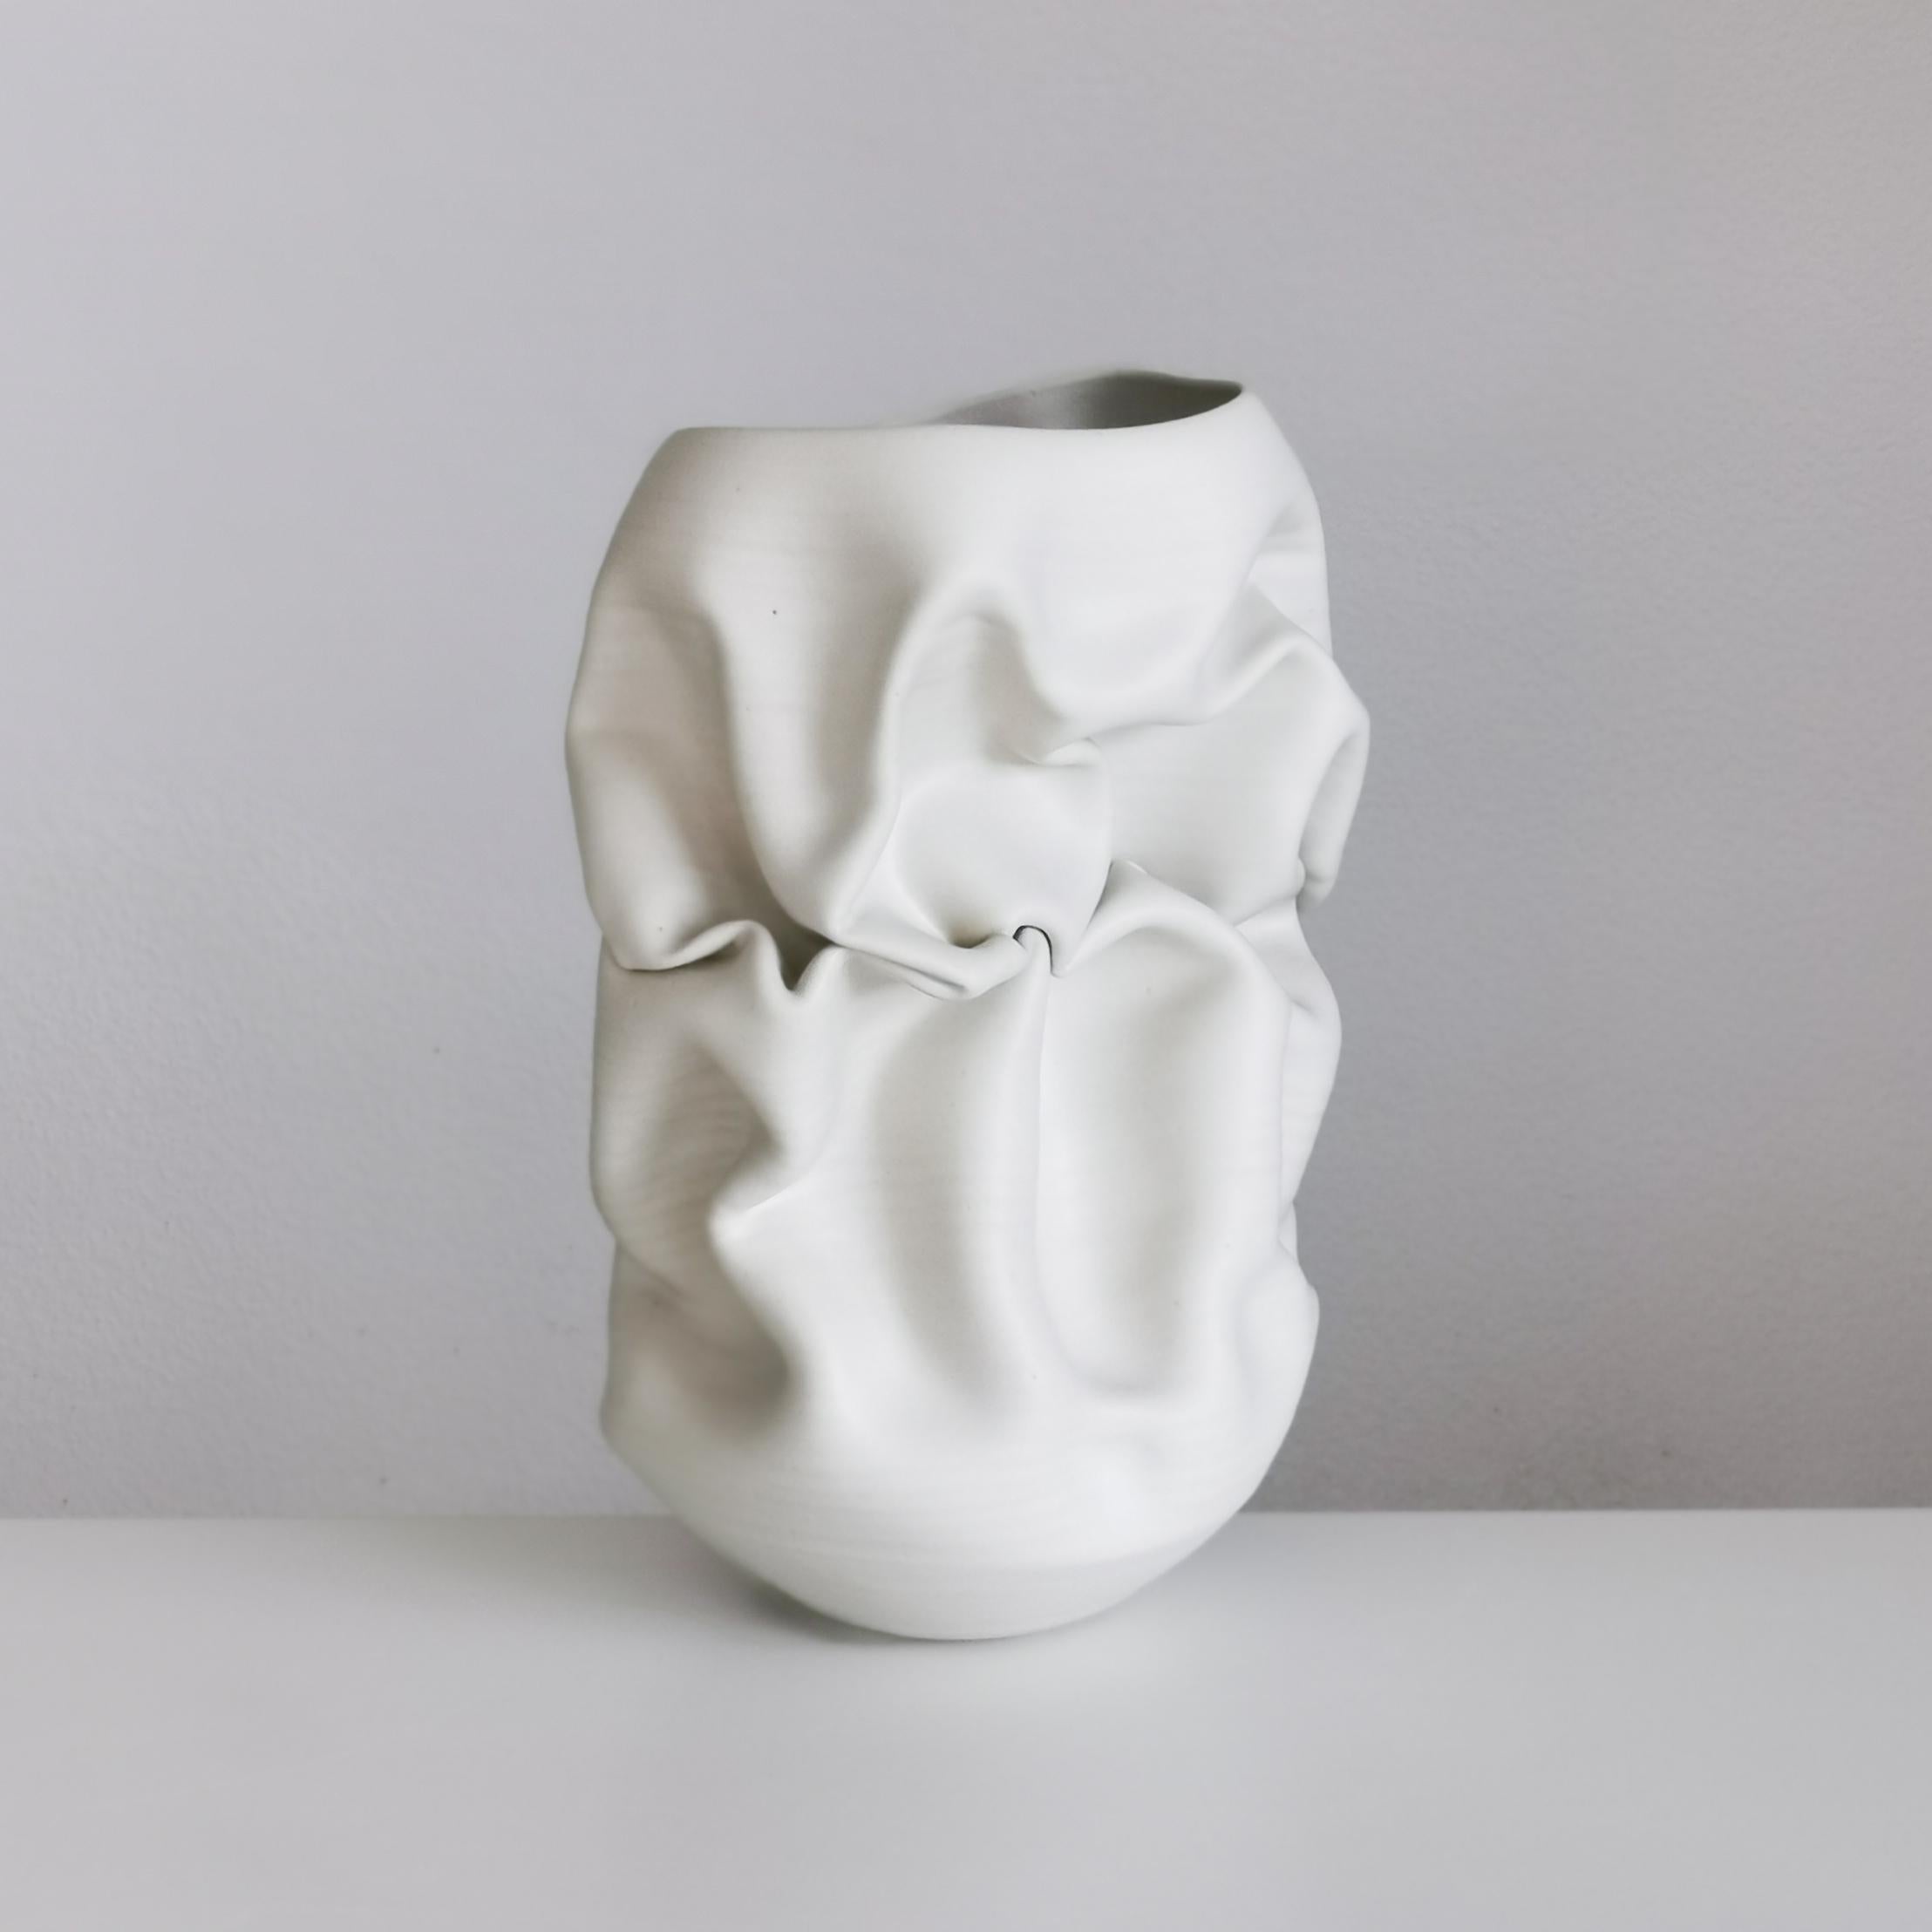 Other Ceramic Sculpture Vessel, N. 50 Medium Tall White Crumpled Form, Objet d'Art